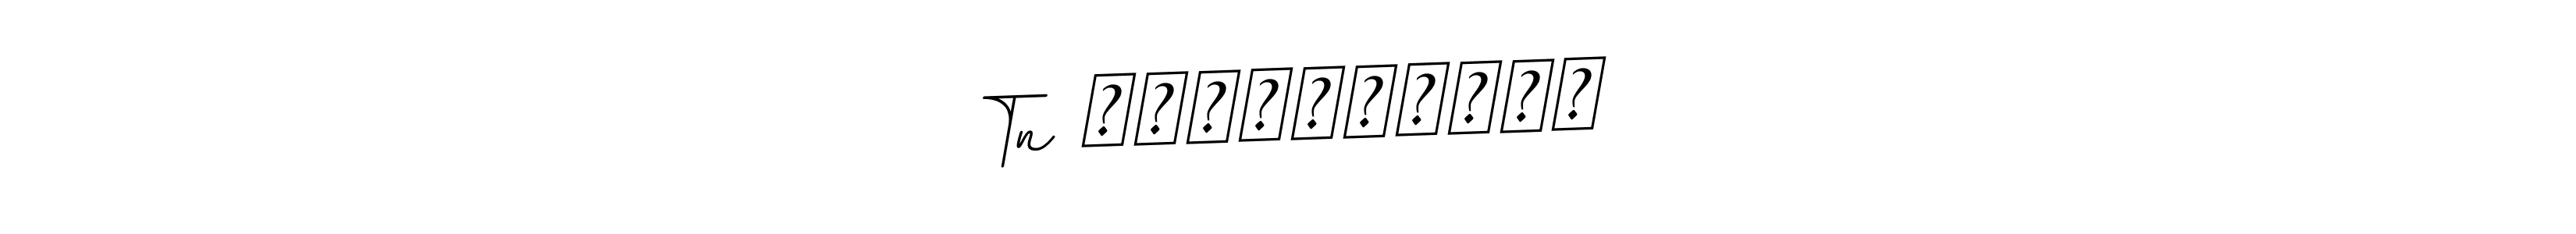 How to Draw Tn அமரன்அமரன் signature style? BallpointsItalic-DORy9 is a latest design signature styles for name Tn அமரன்அமரன். Tn அமரன்அமரன் signature style 11 images and pictures png